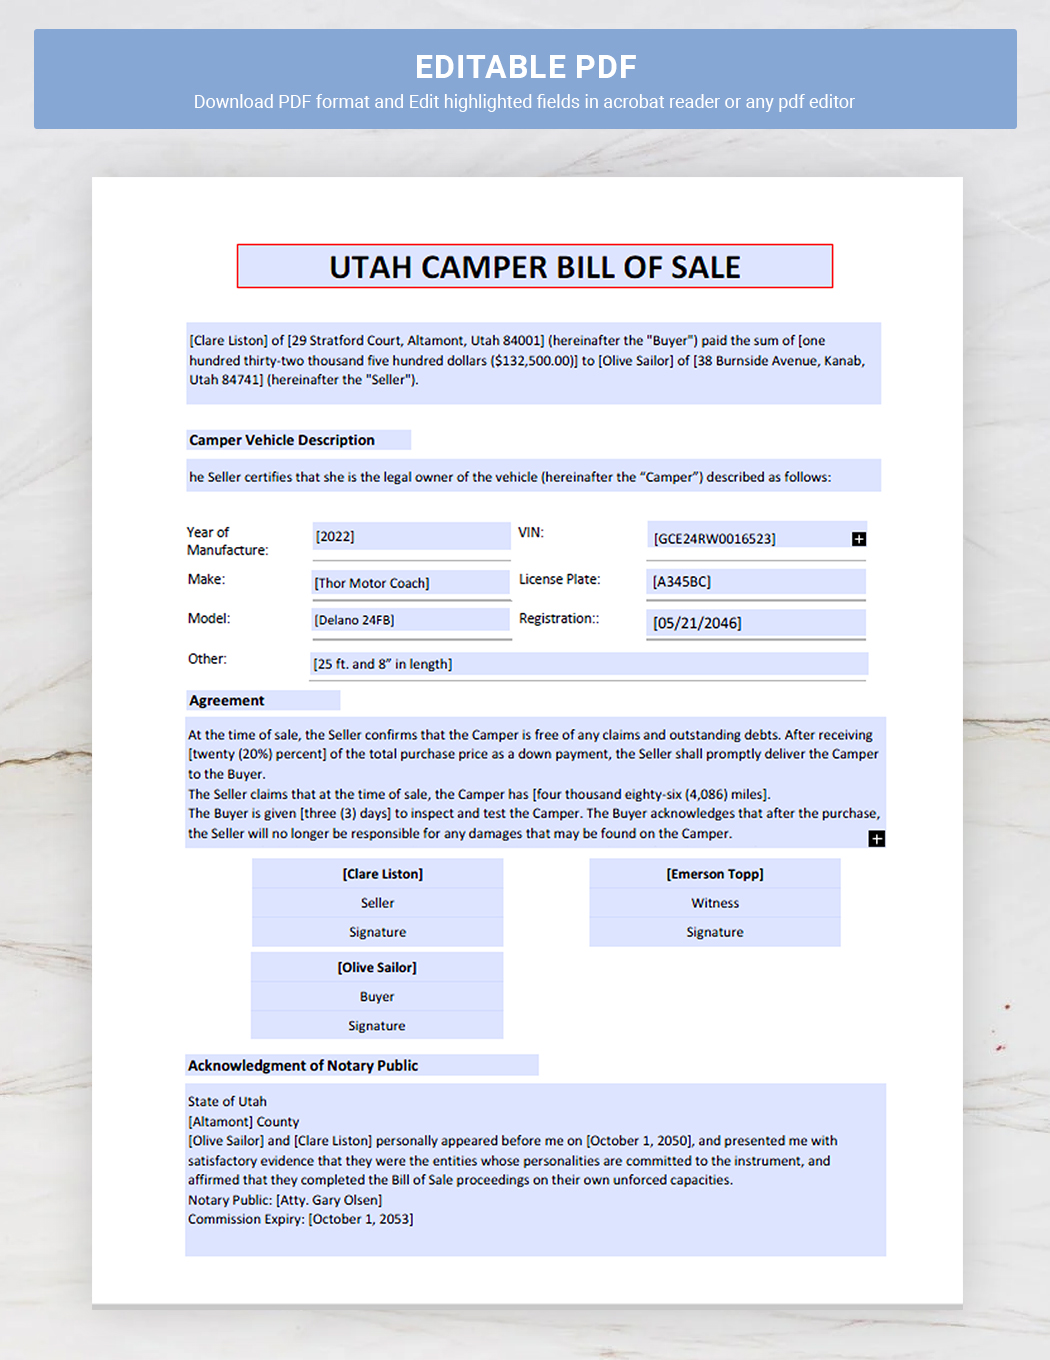 Utah Camper Bill of Sale Template